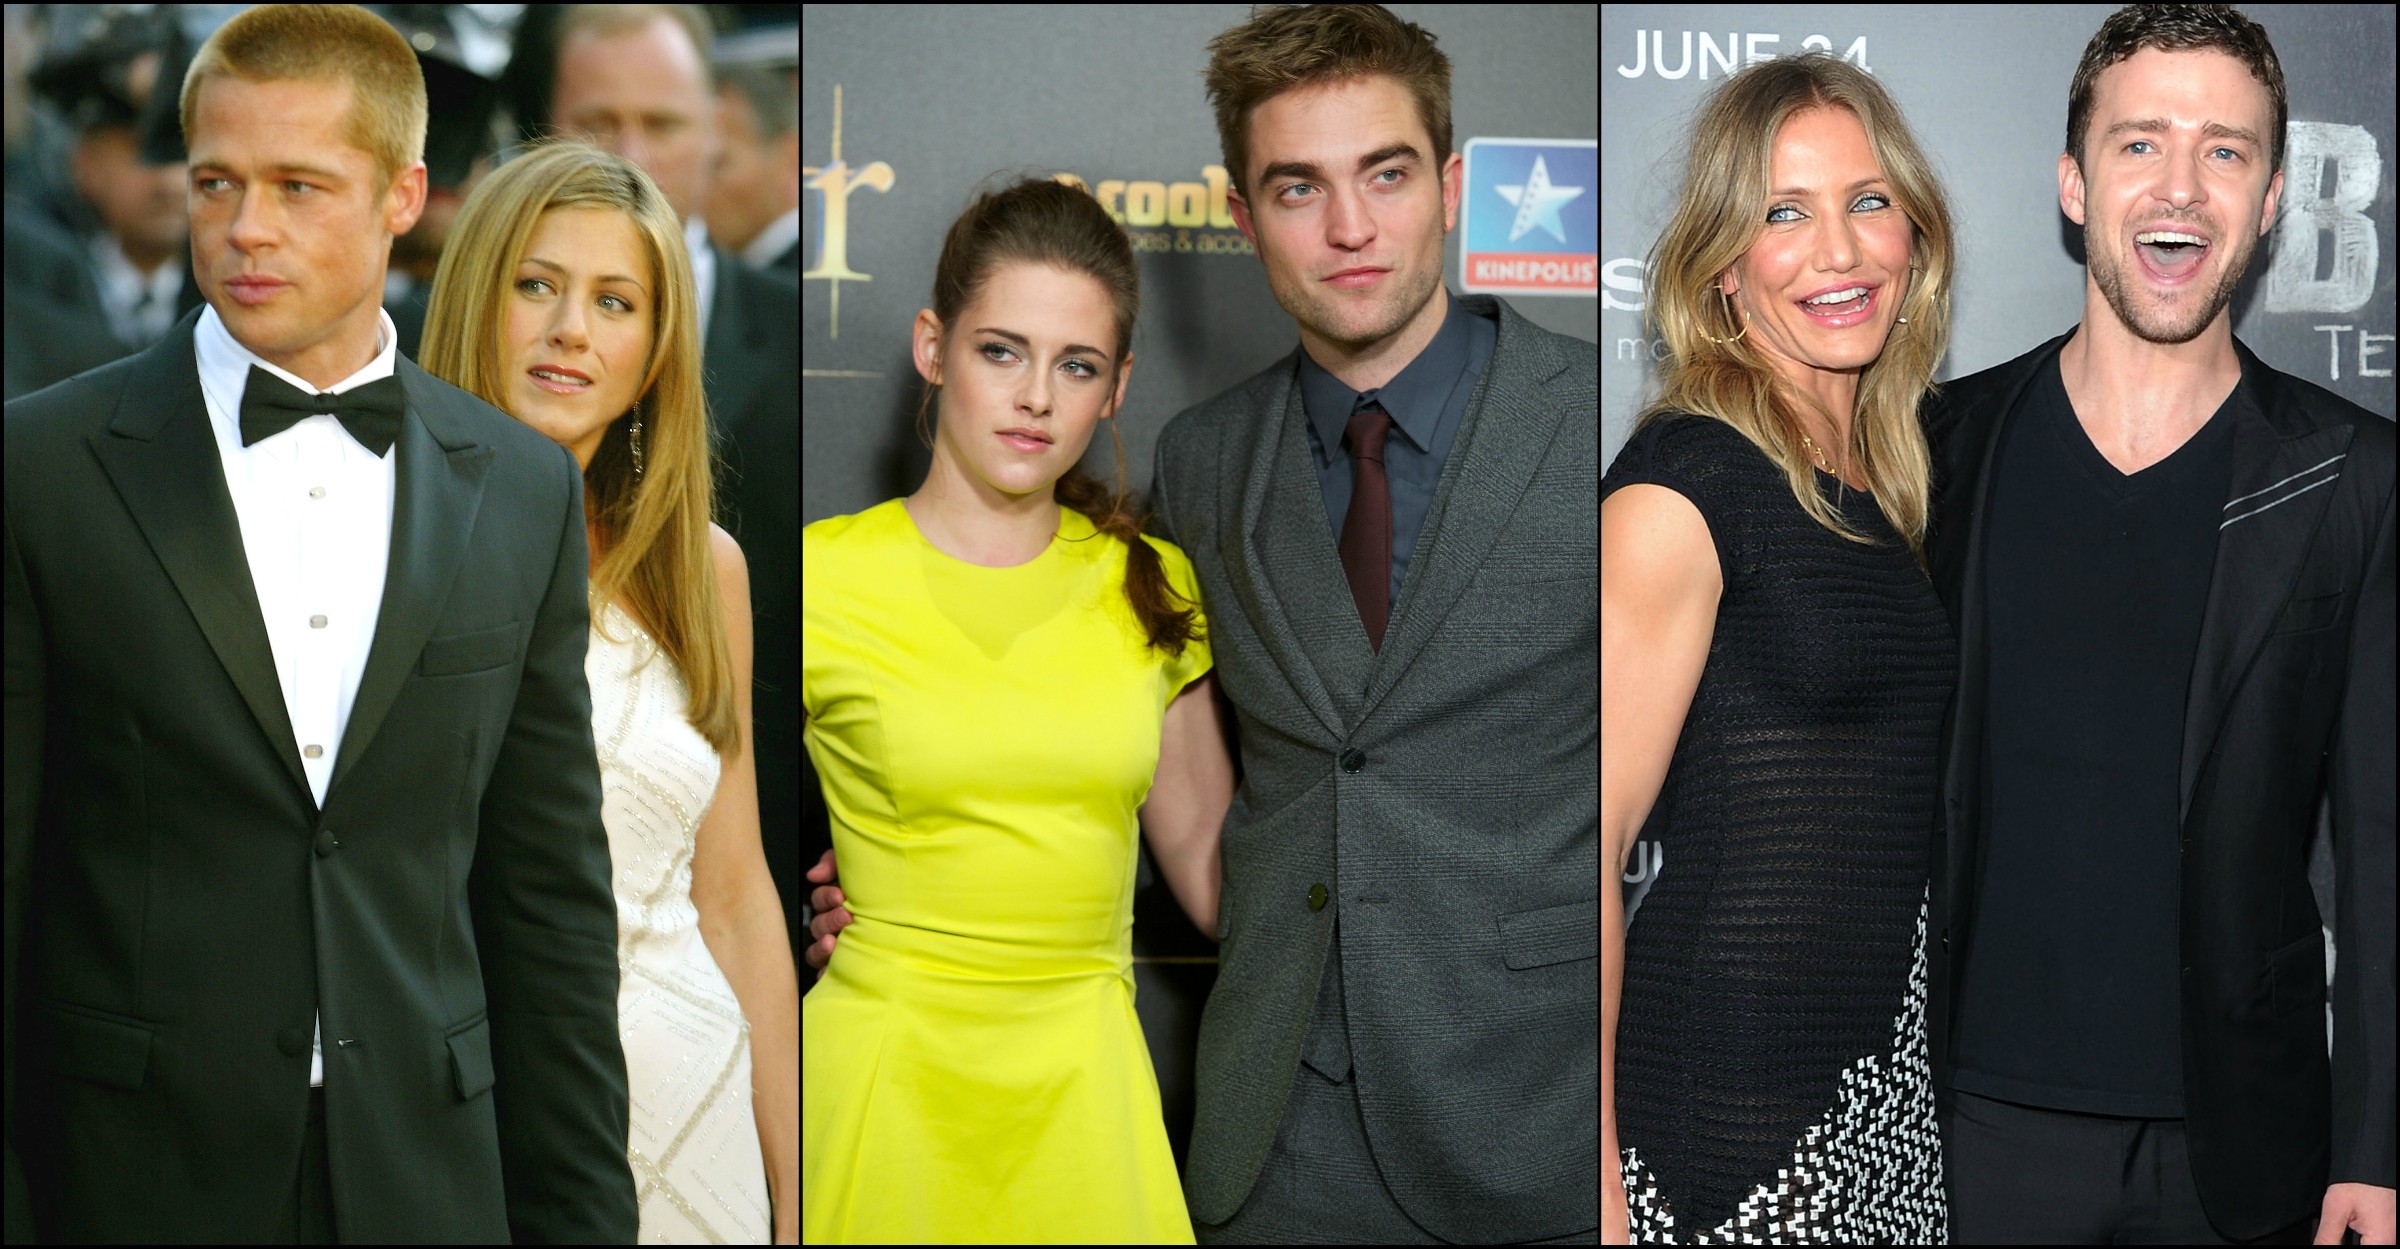 Brad Pitt com Jennifer Aniston, Kristen Stewart com Robert Pattinson e Cameron Diaz com Justin Timberlake (Foto: Getty Images)